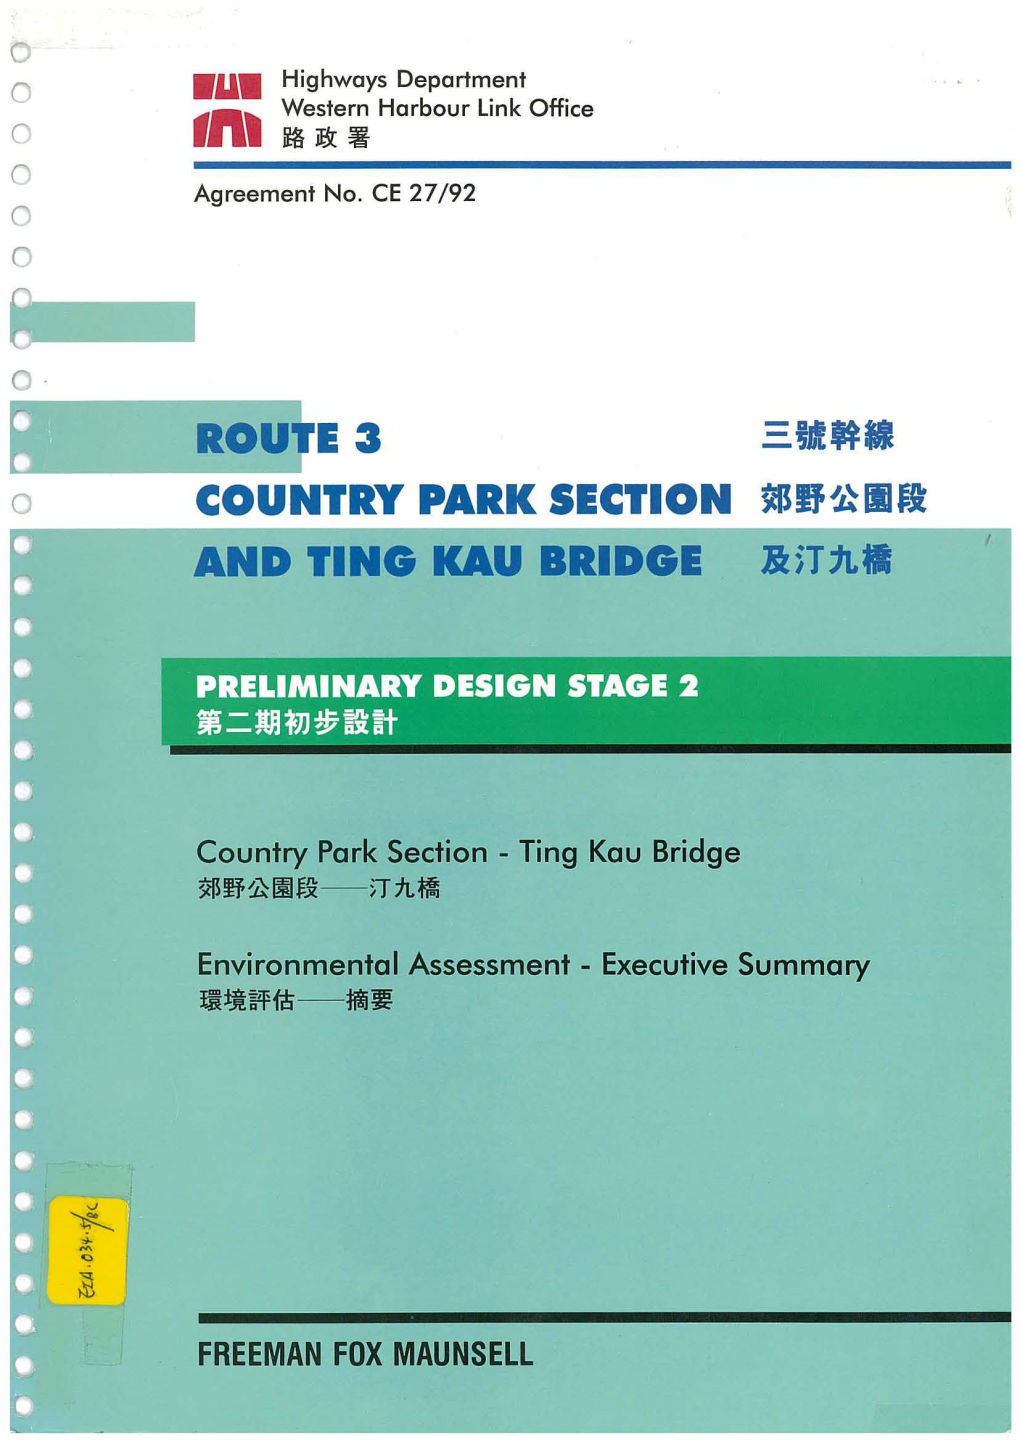 COUNTRY PARK SECTION ~B~Iiijt and TING KAU BRIDGE &5T:I1. •